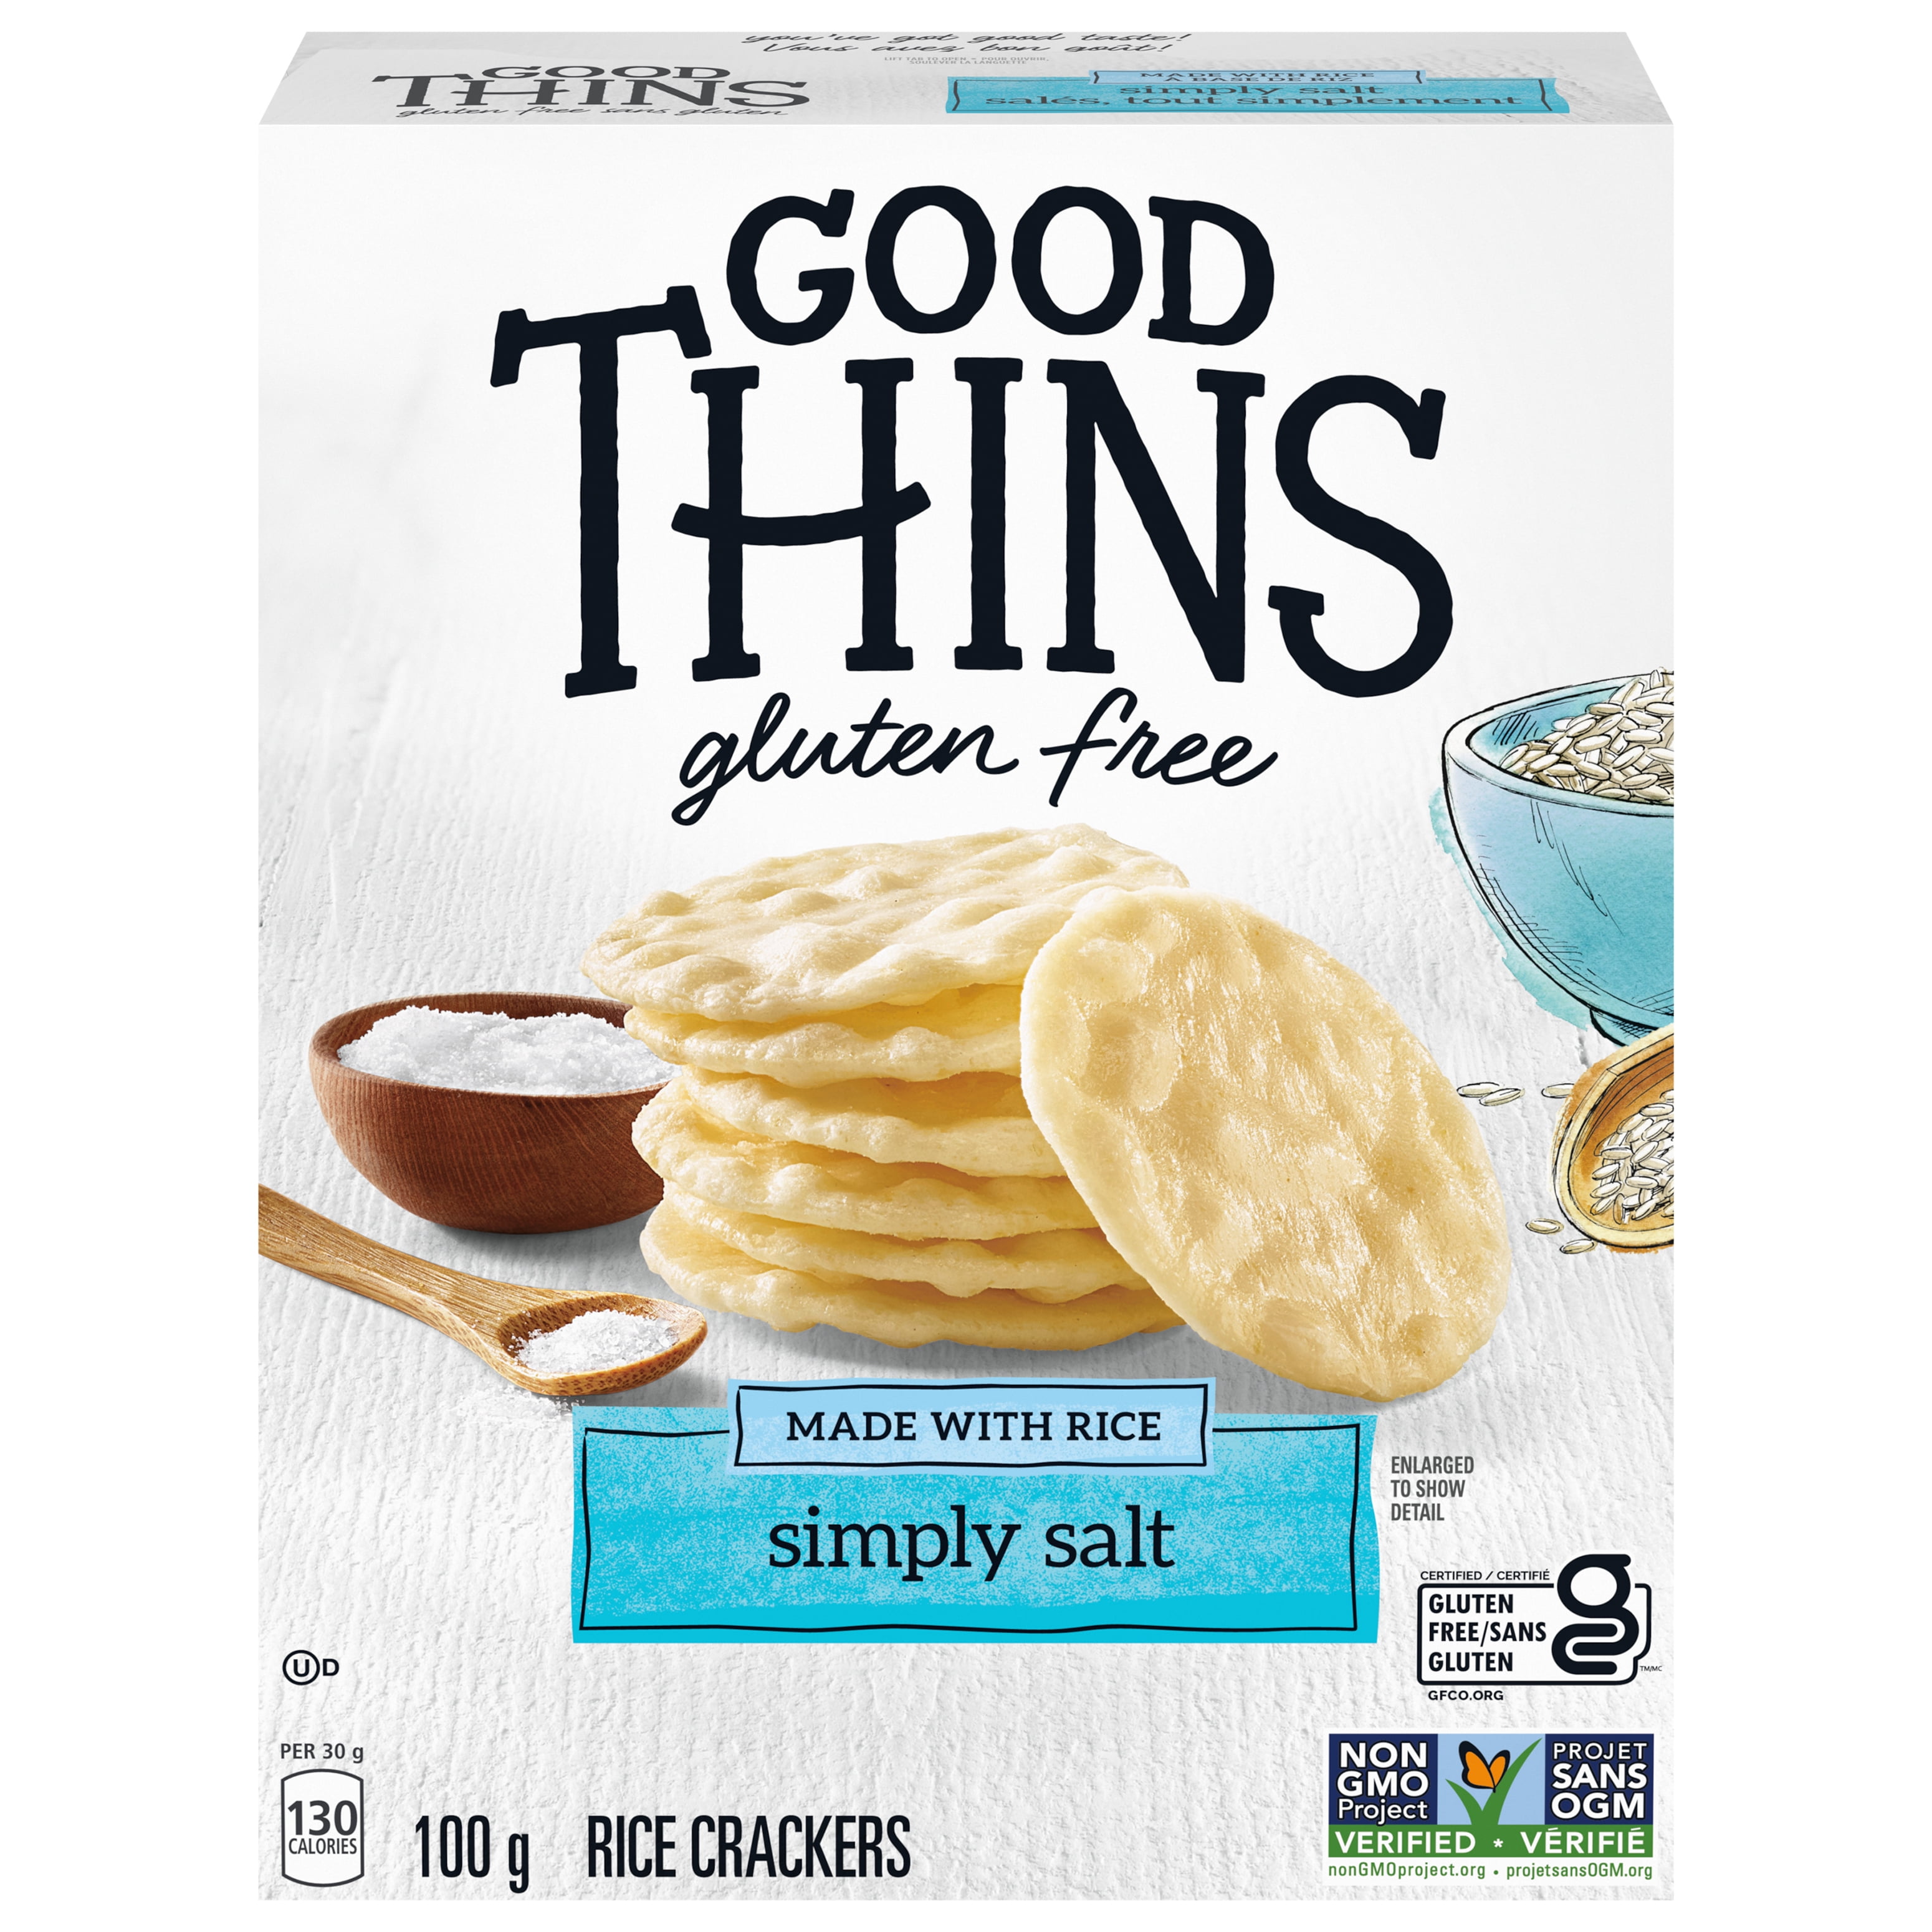 Mondelēz Introduces Good Thins, 2016-03-10